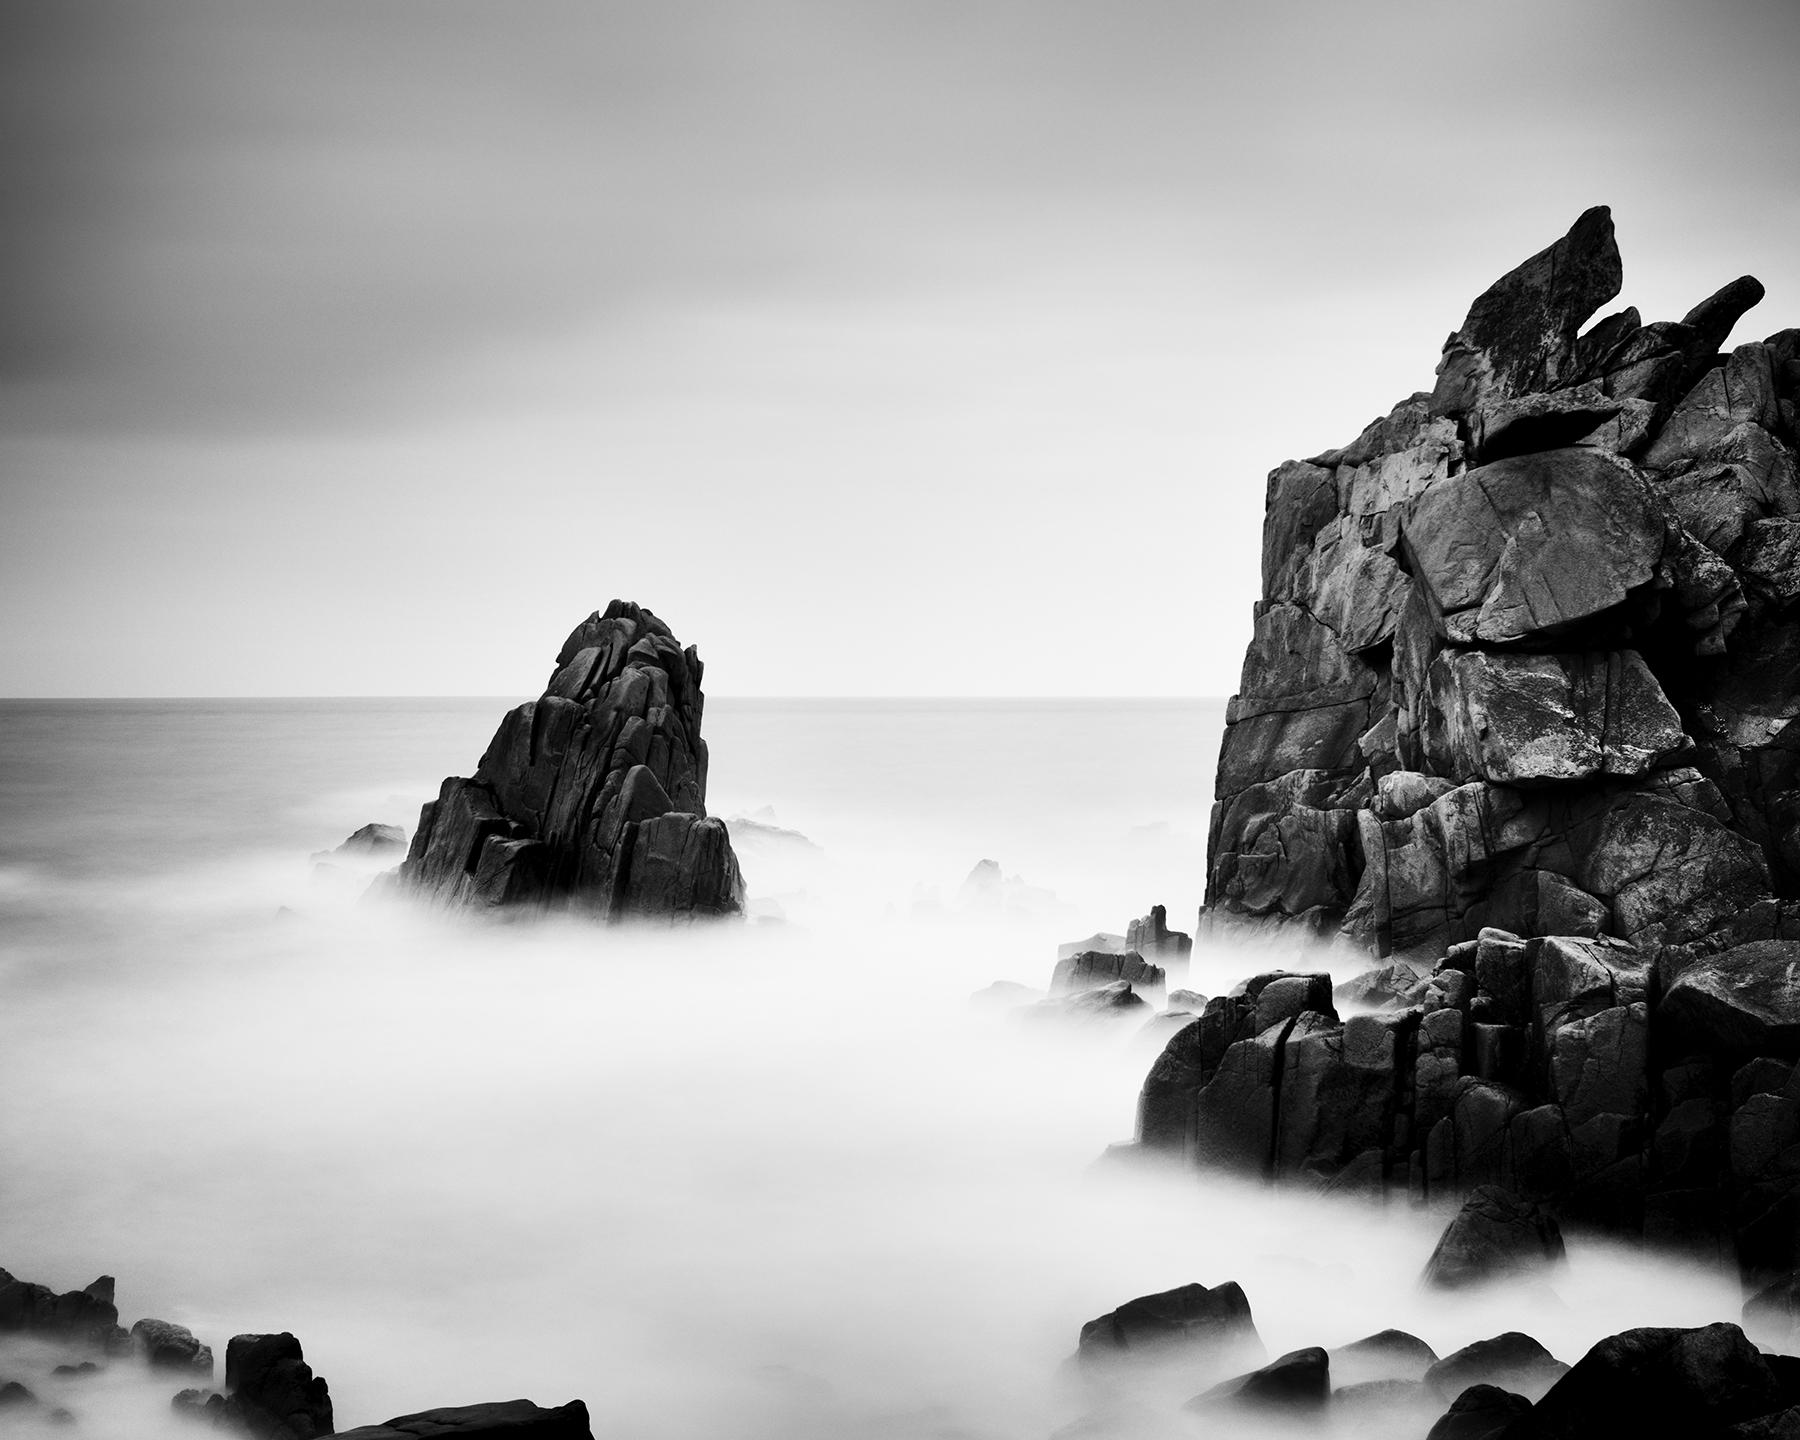 Gerald Berghammer Landscape Photograph - Rocky Stone Coast, France, long exposure, black & white photography, landscape